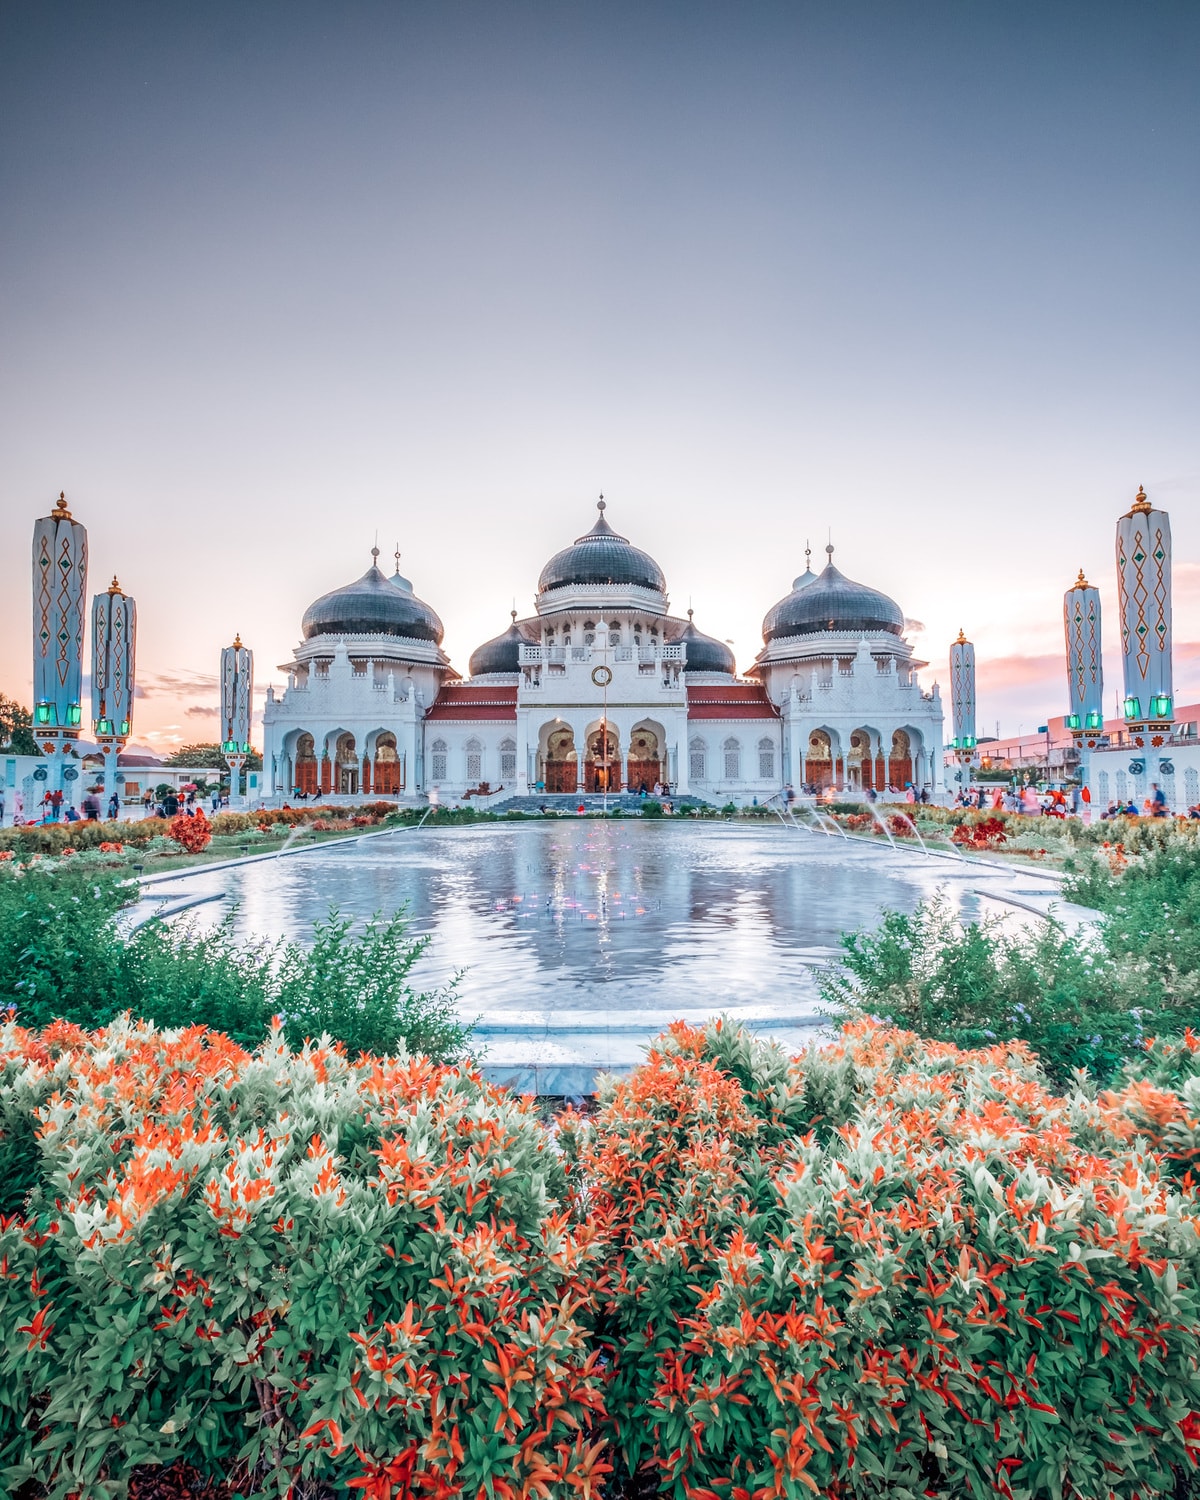 The Grand Mosque of Baiturrahman